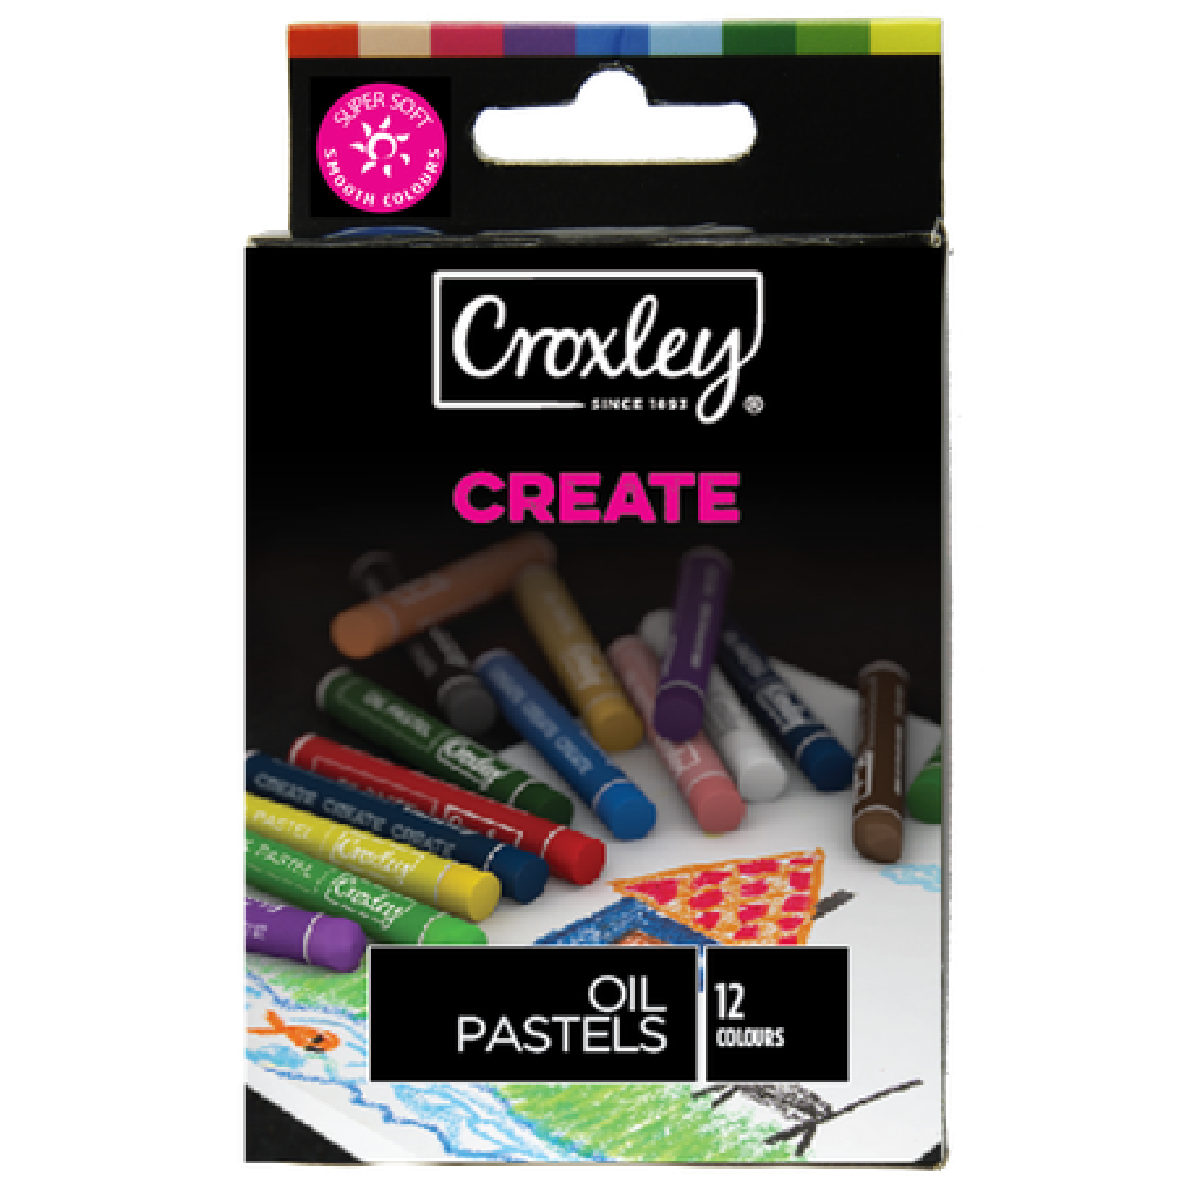 Croxley Oil Pastles12 Pack